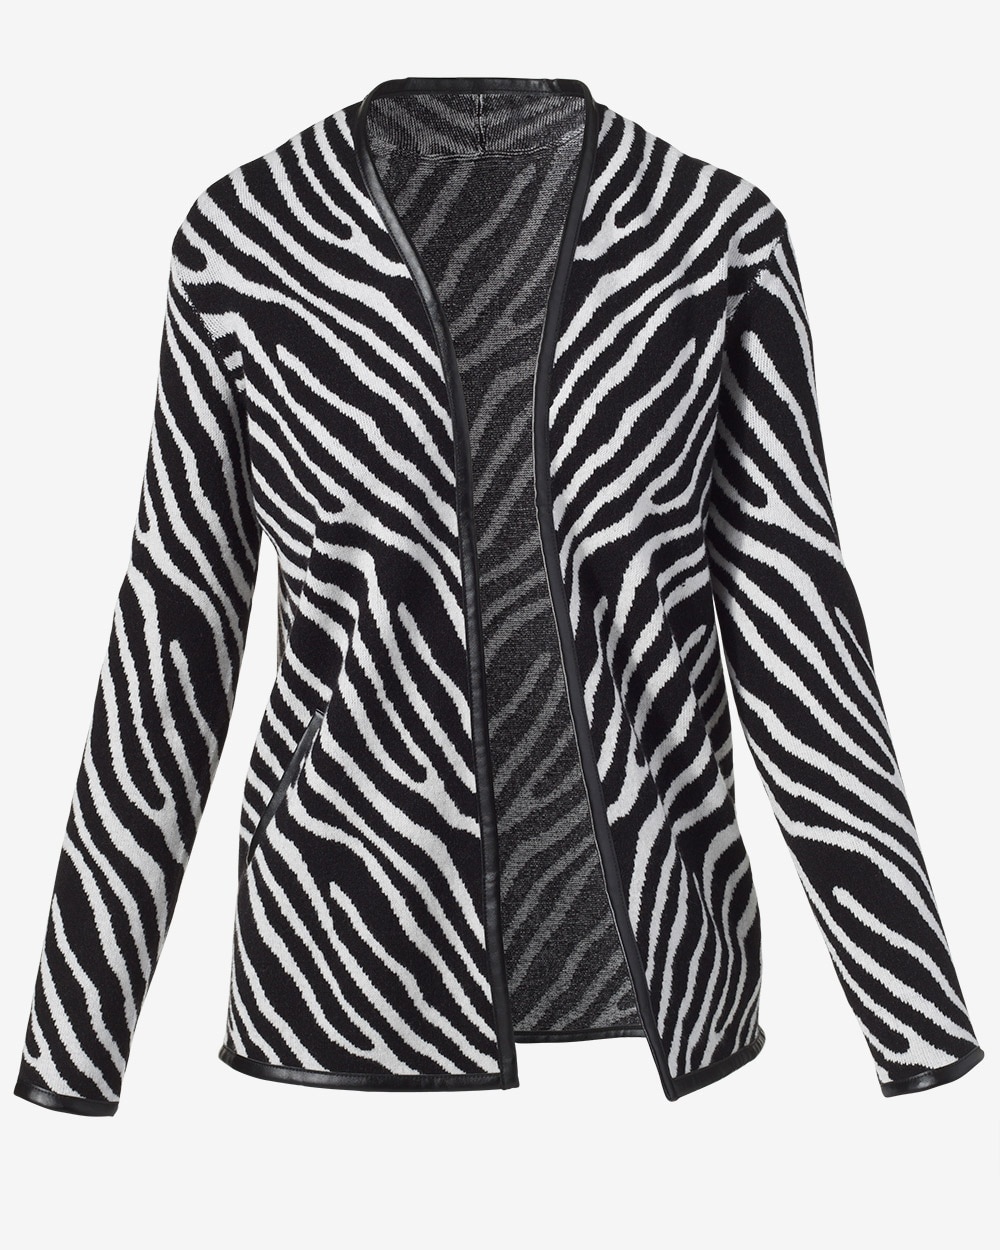 Plush Zebra Sweater Jacket